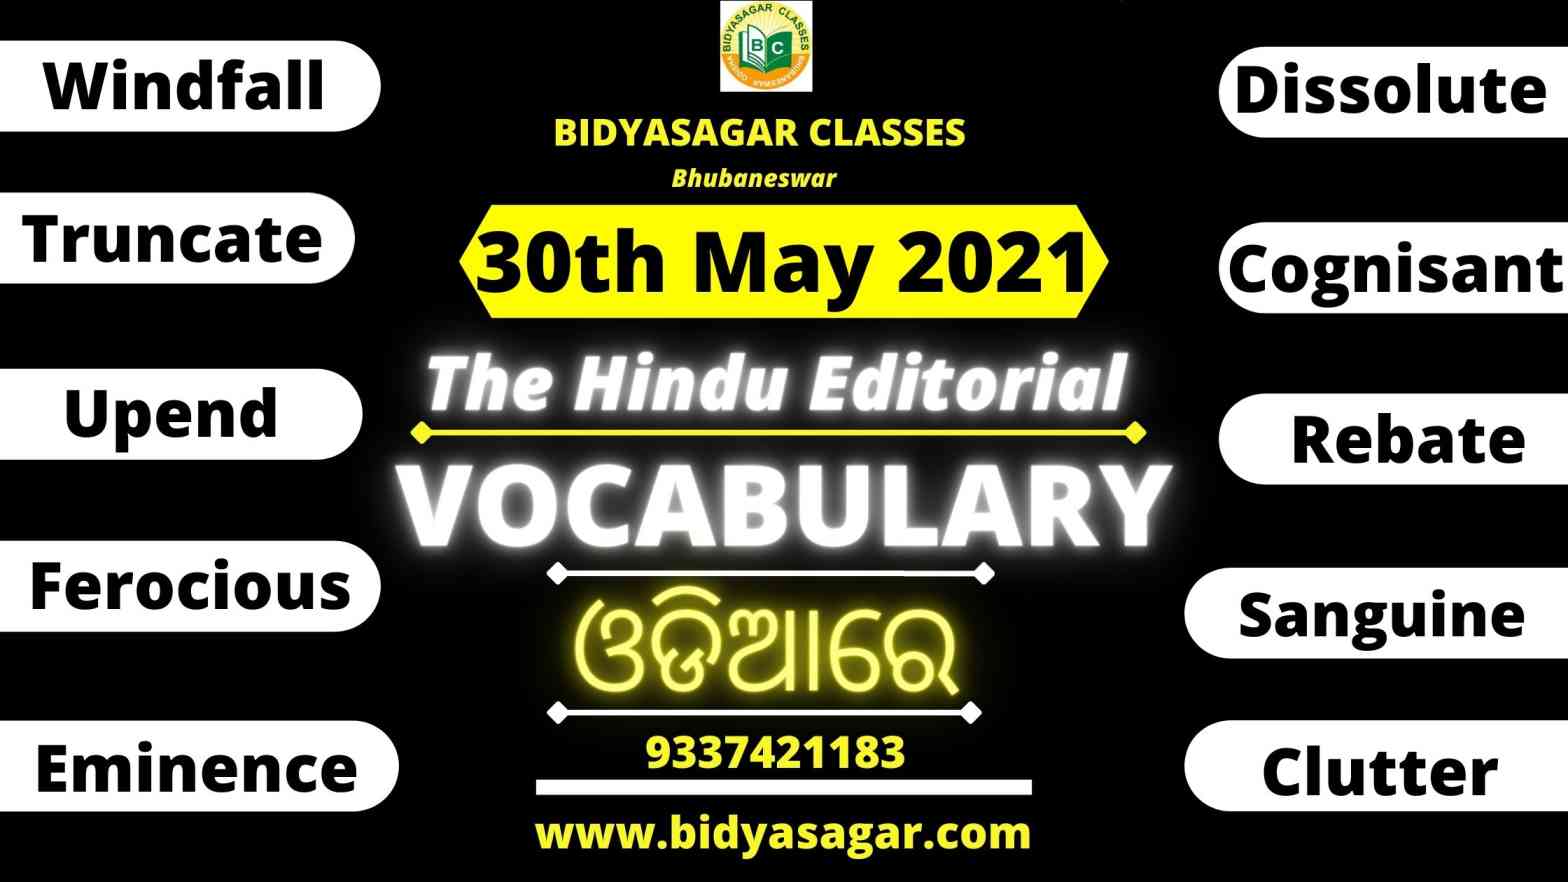 The Hindu Editorial Vocabulary of 30th May 2021